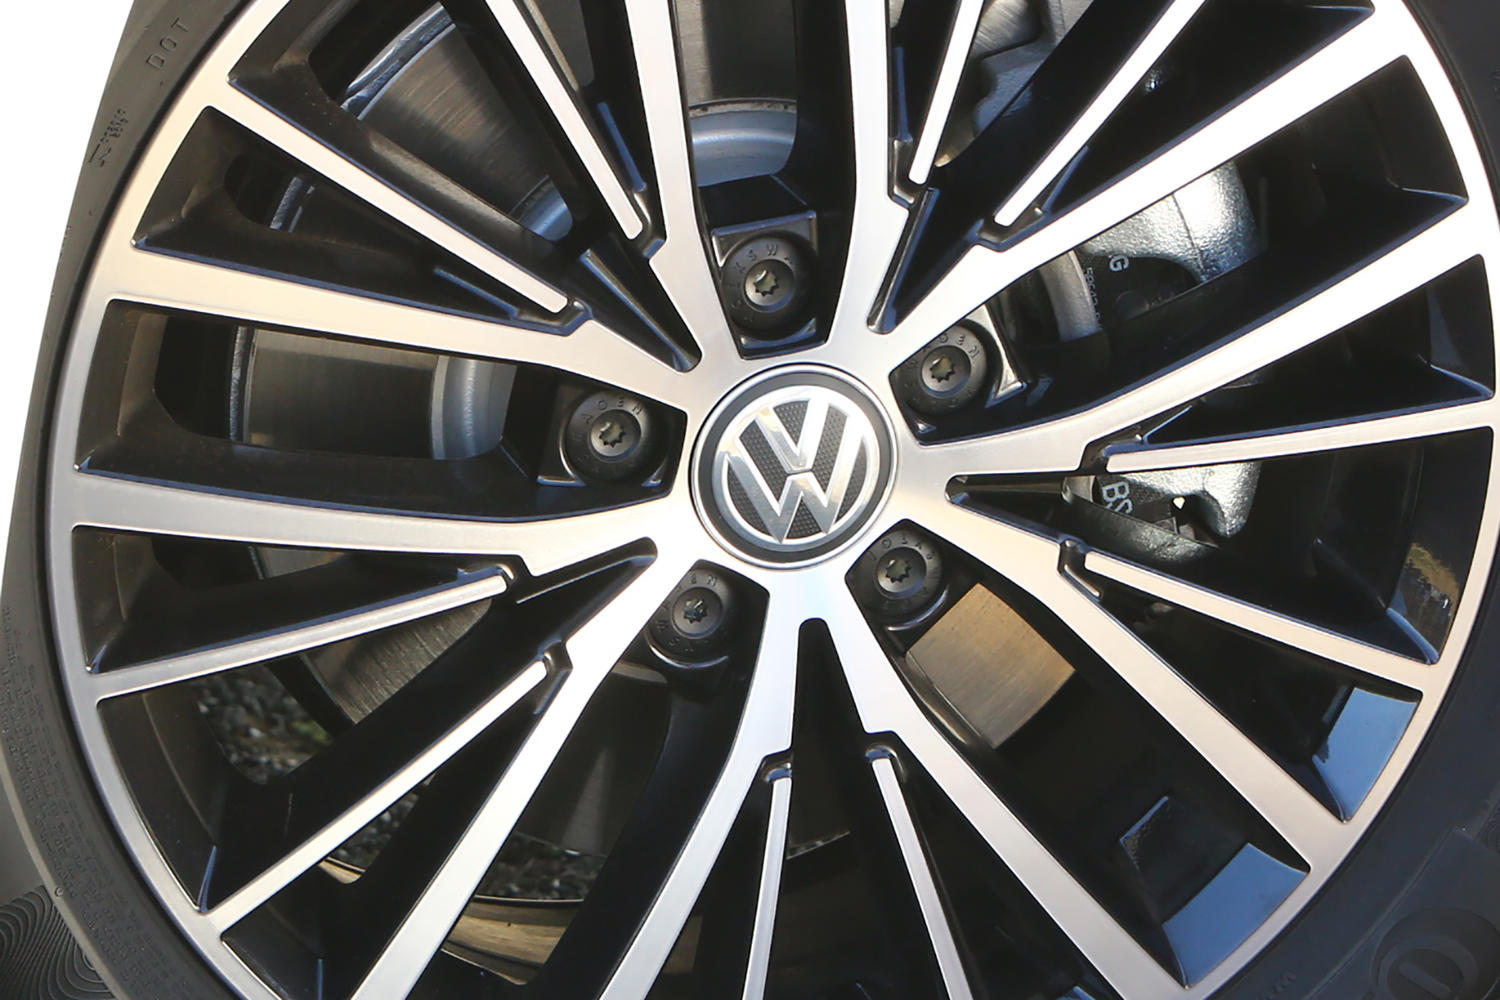 VWが純正採用する特殊な形状のボルト